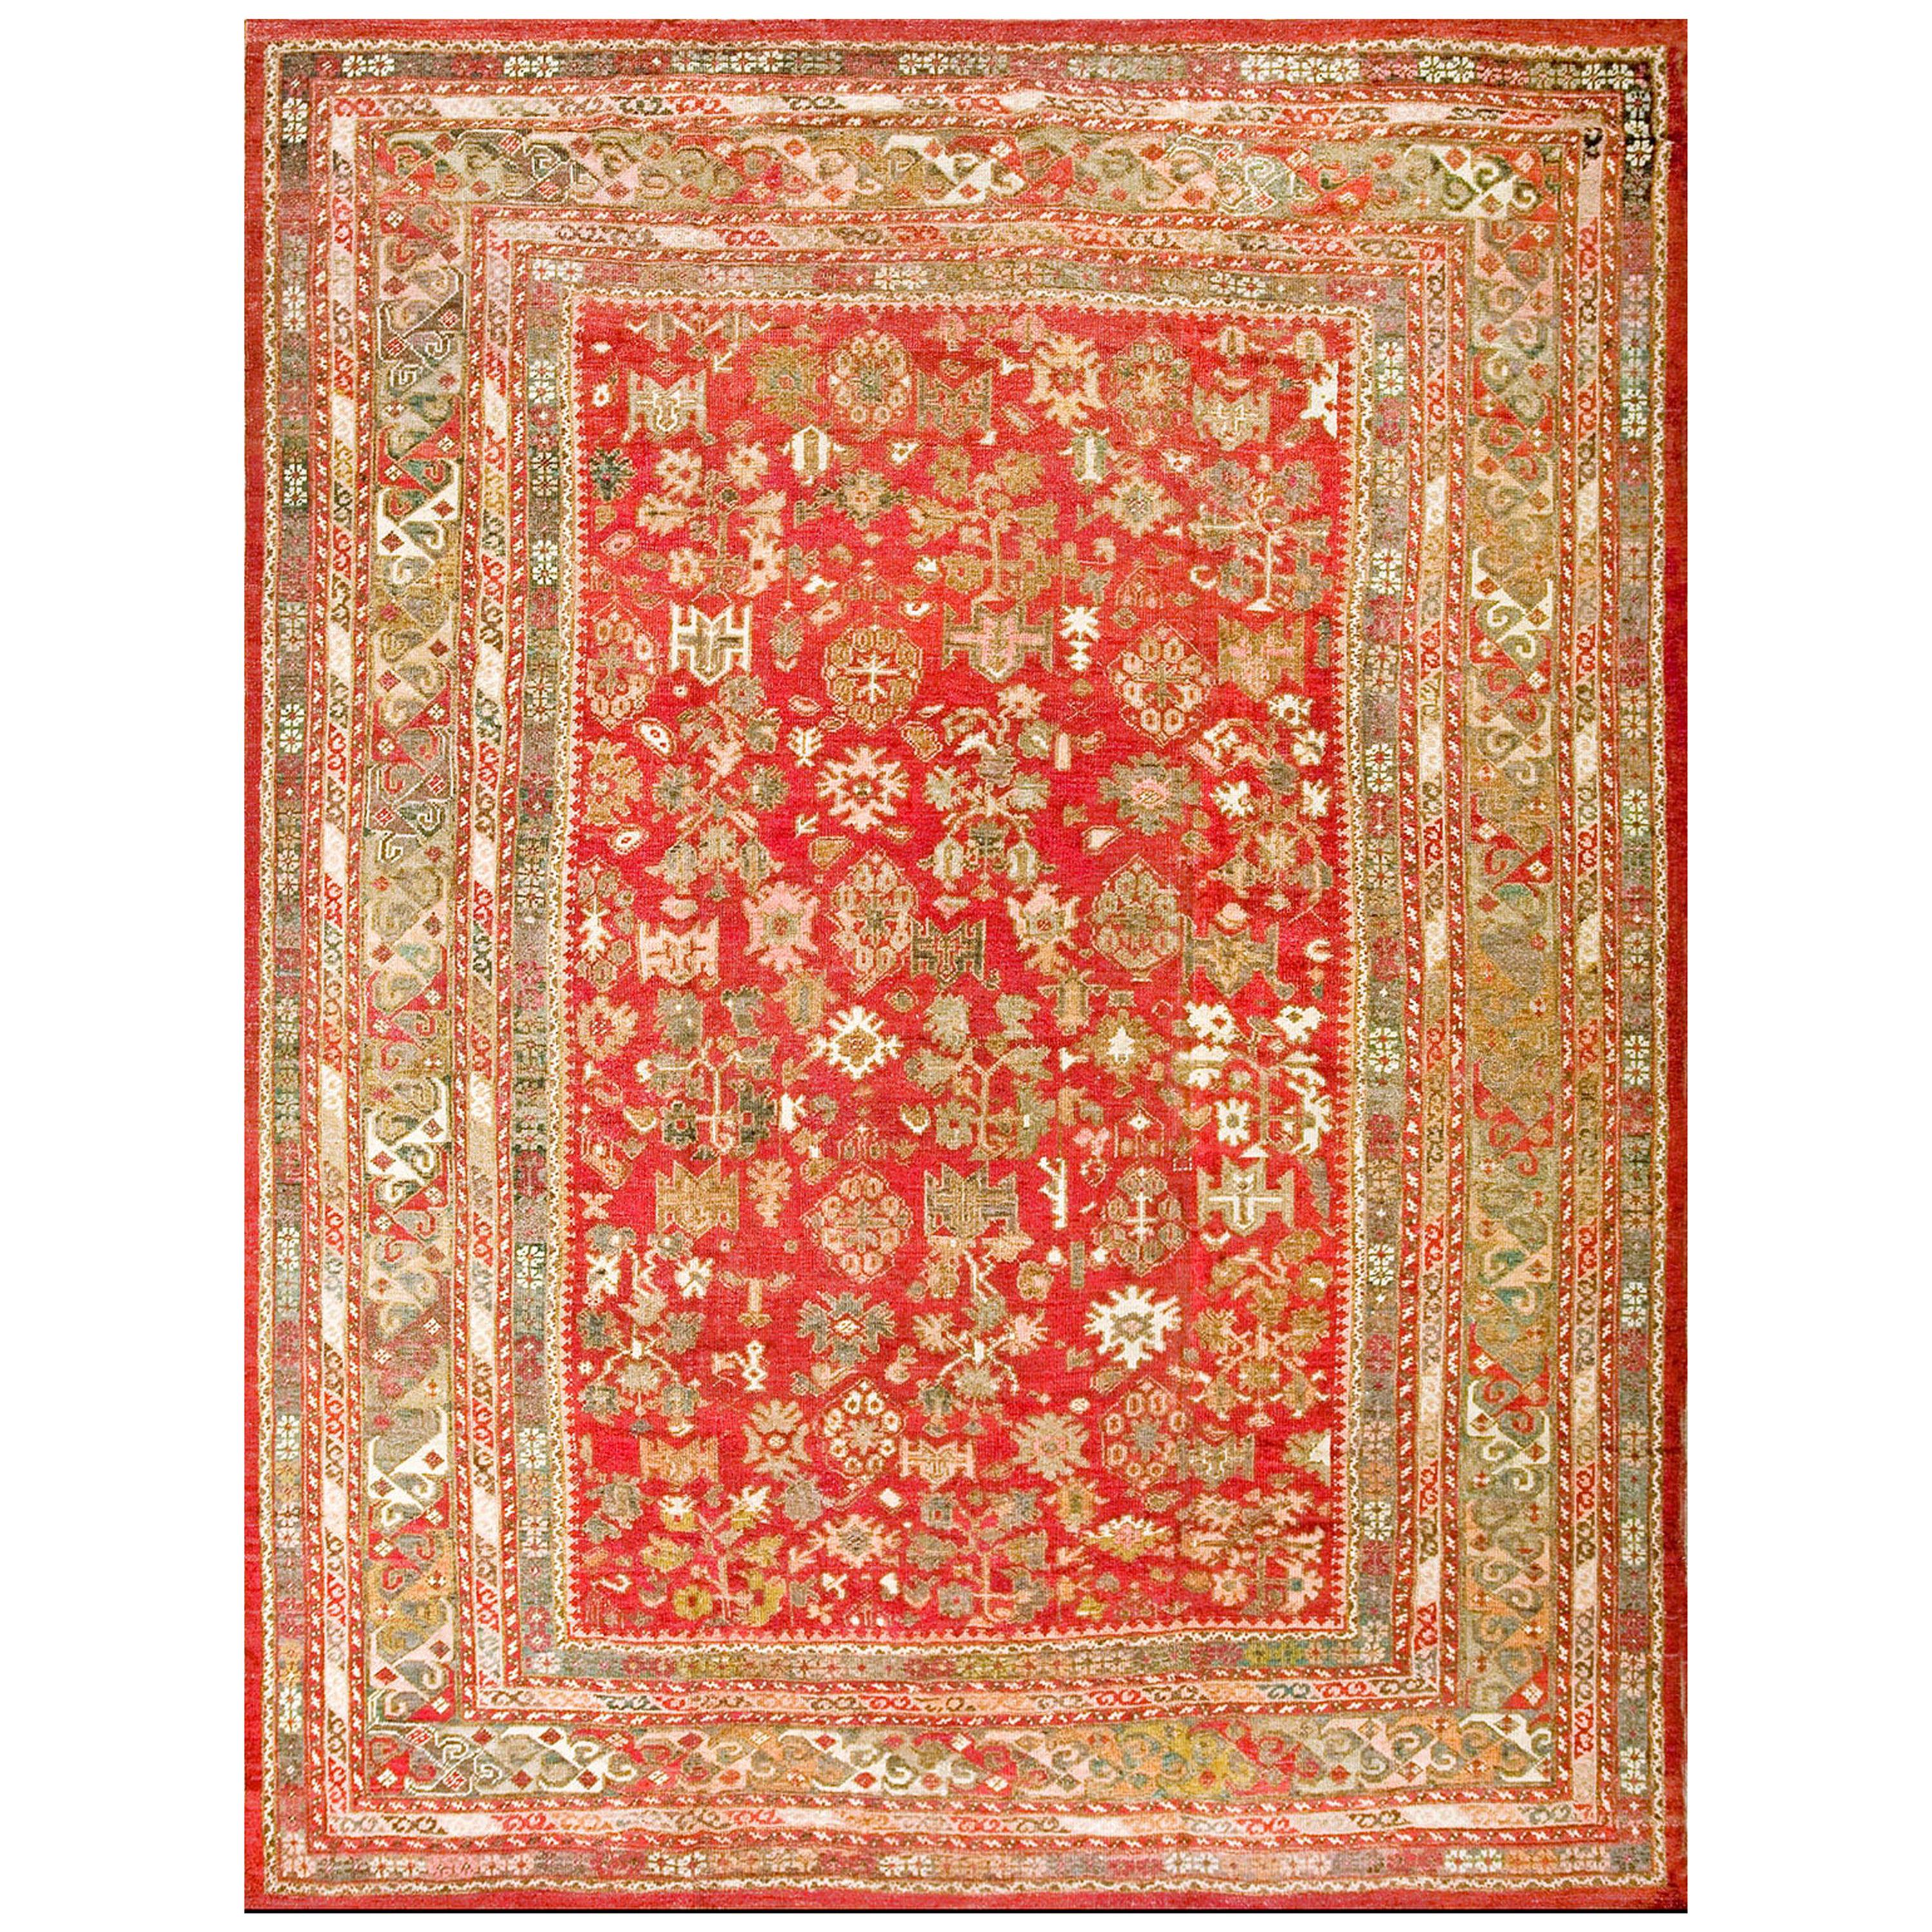 19th Century Turkish Ghiordes Oushak Carpet ( 9' x 11'8" - 275 x 355 )